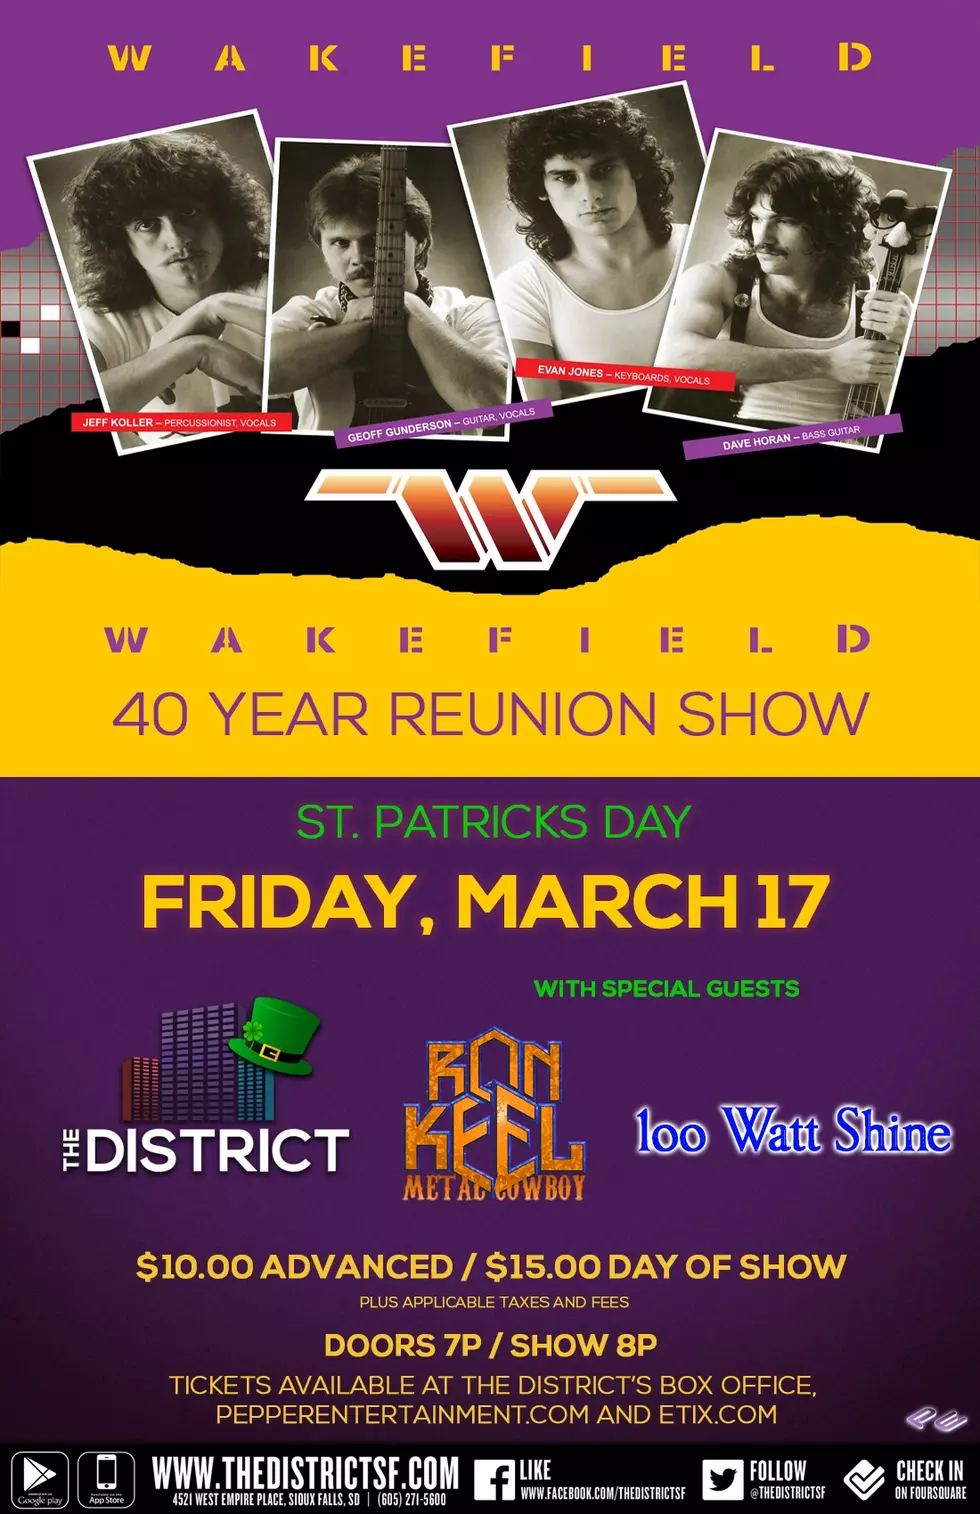 Wakefield's 40 Year Reunion